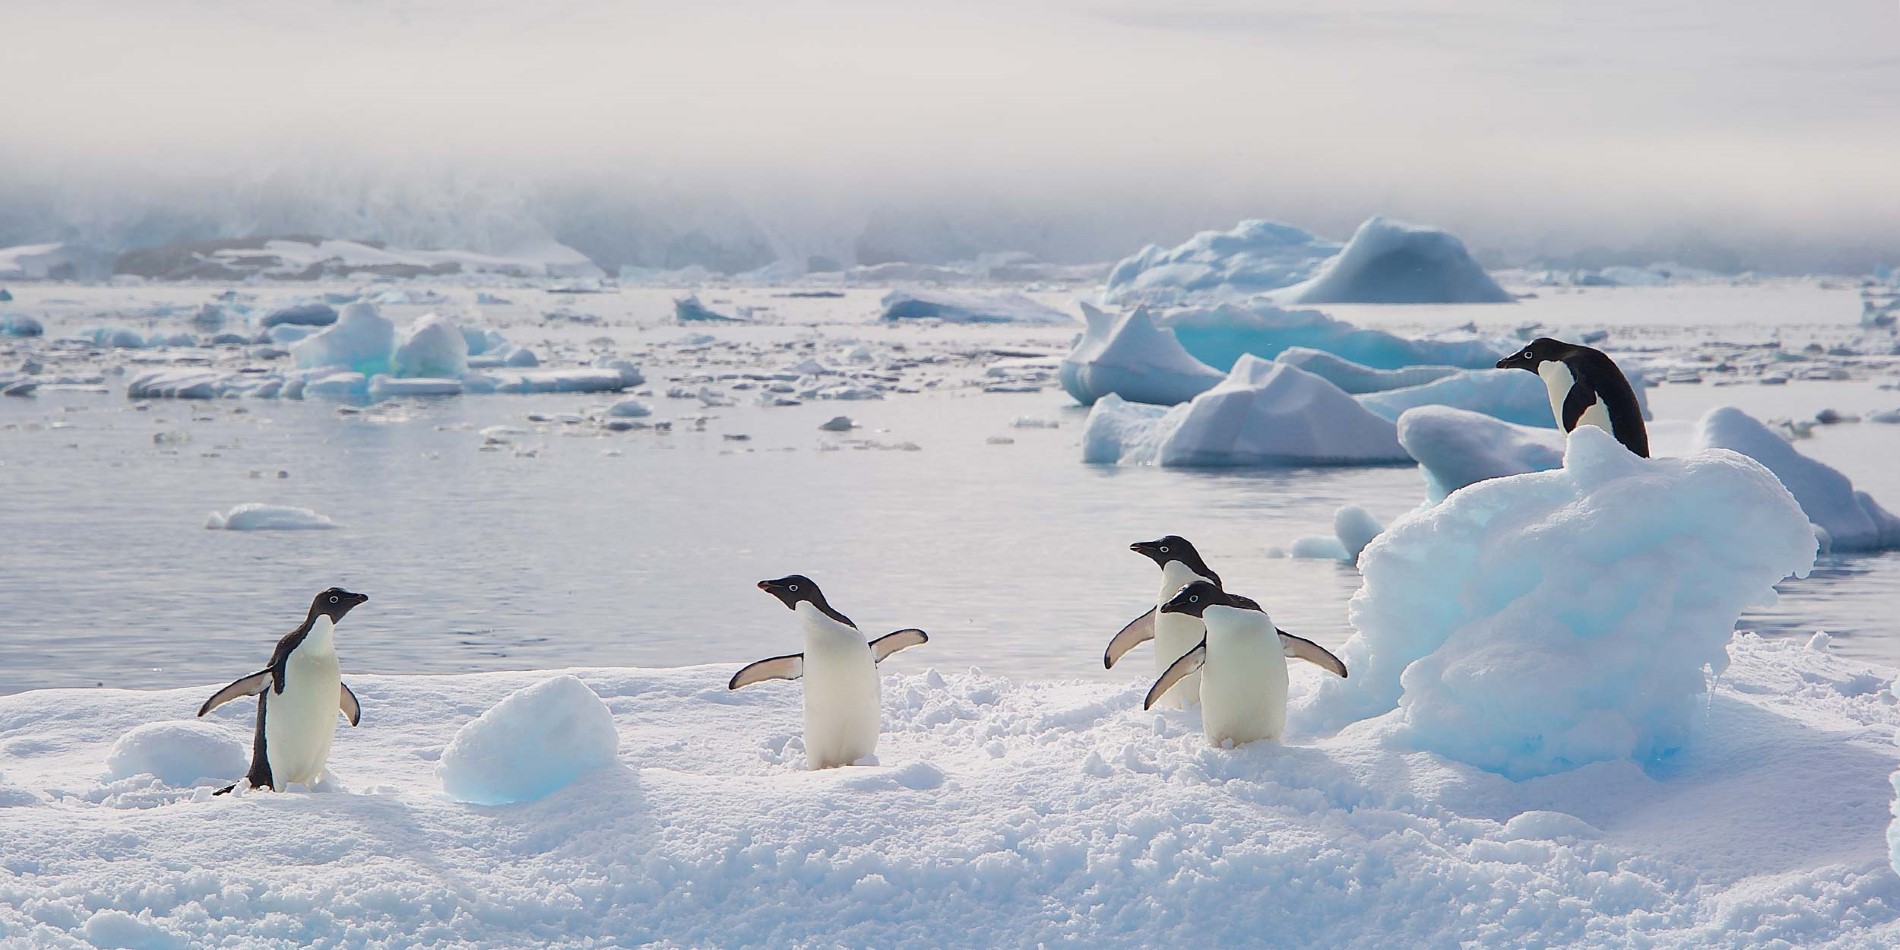 Group of penguins sitting on drift ice